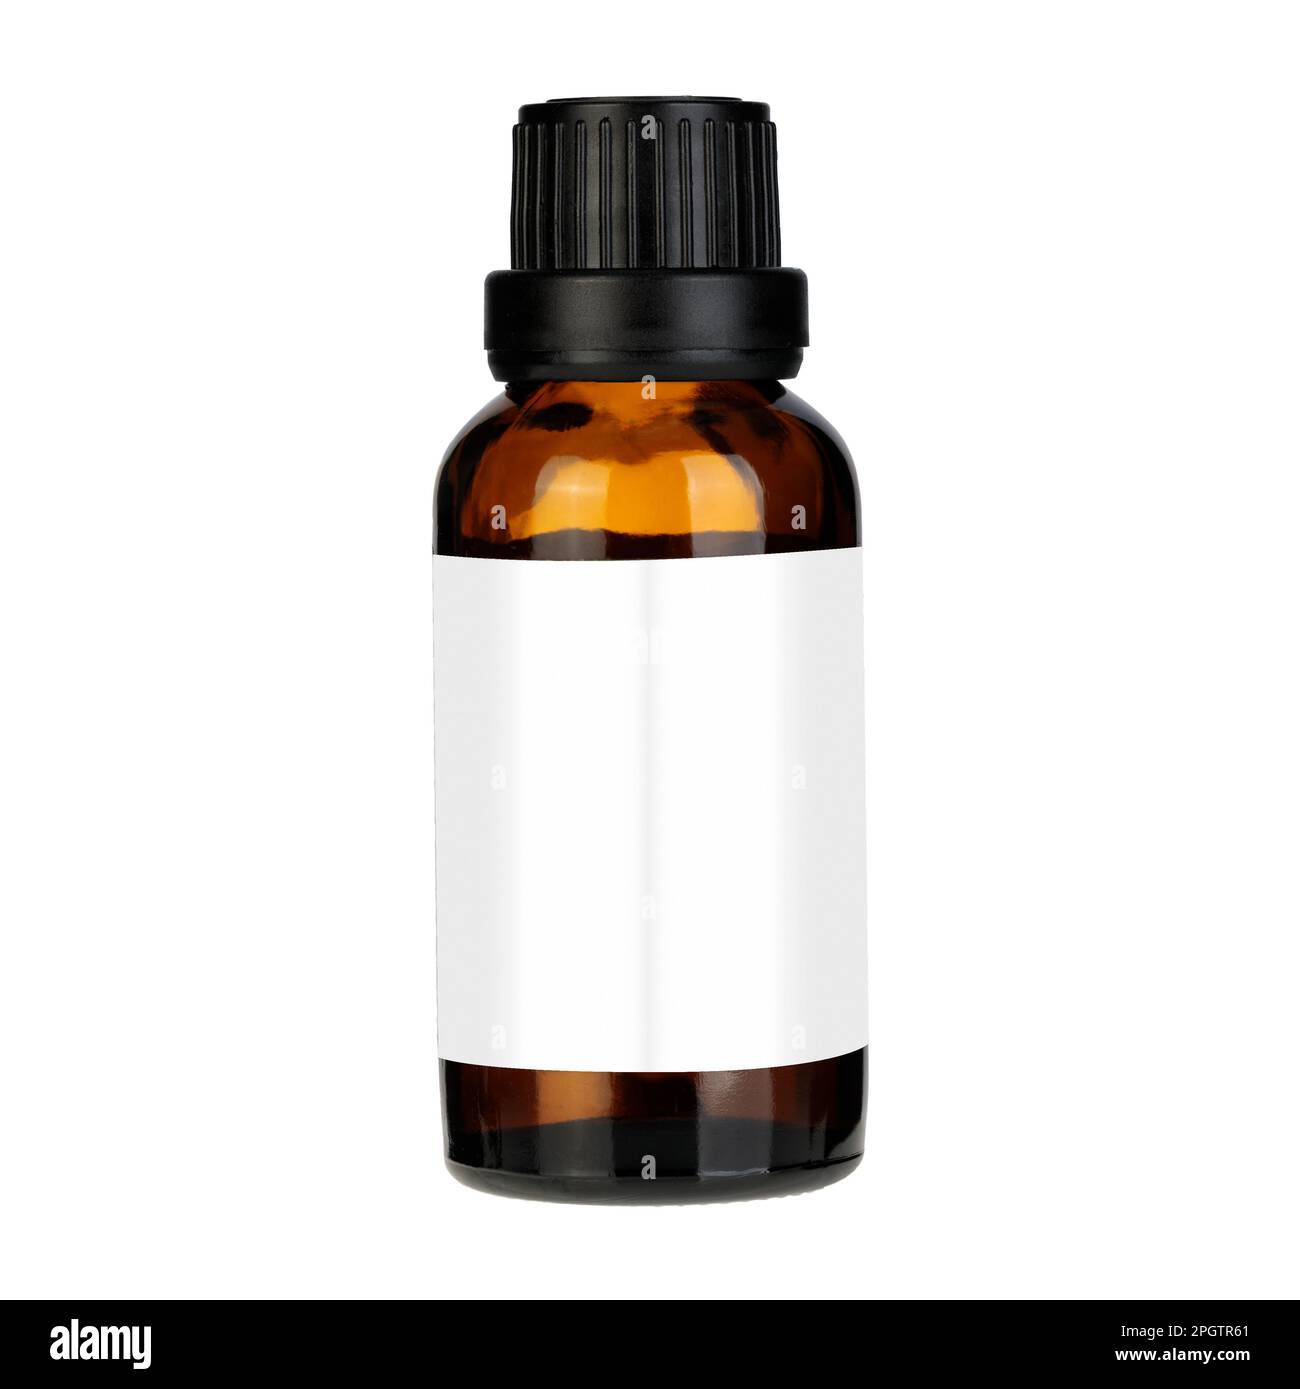 Blank label pharmaceutical amber bottle Mock-Up, isolated. High resolution photo. Stock Photo